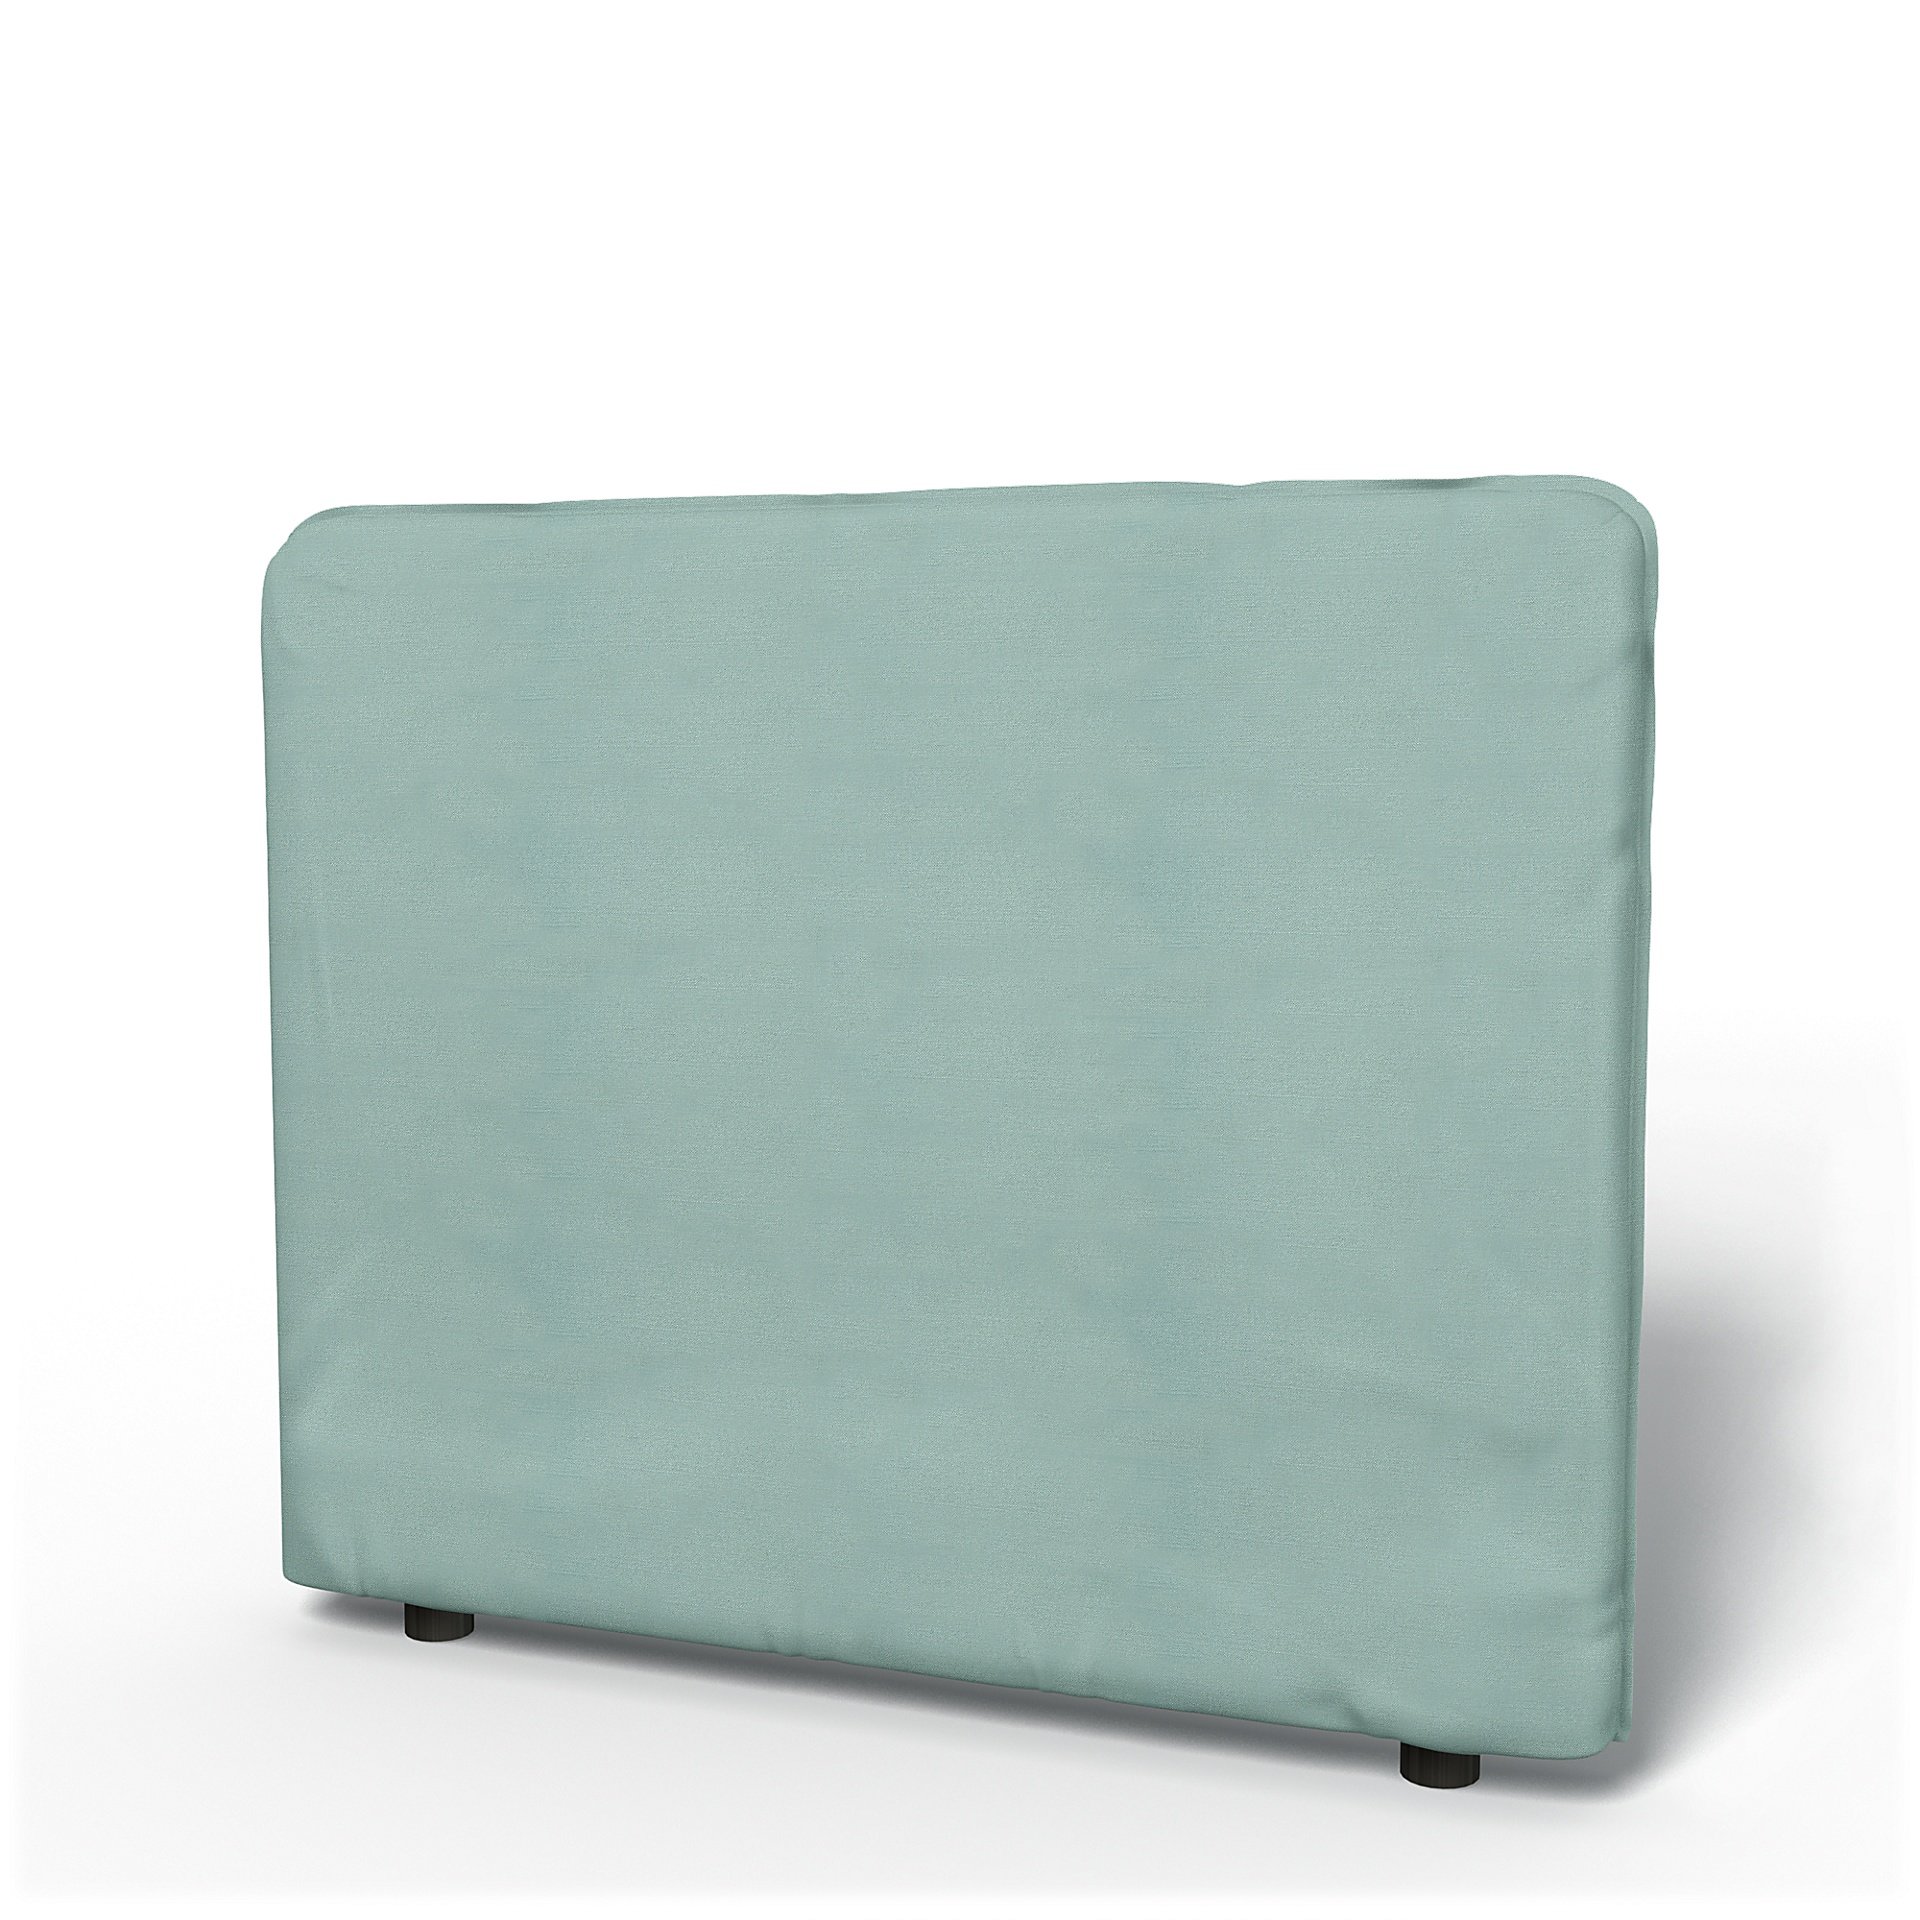 IKEA - Vallentuna Low Backrest Cover 100x80cm 39x32in, Mineral Blue, Linen - Bemz